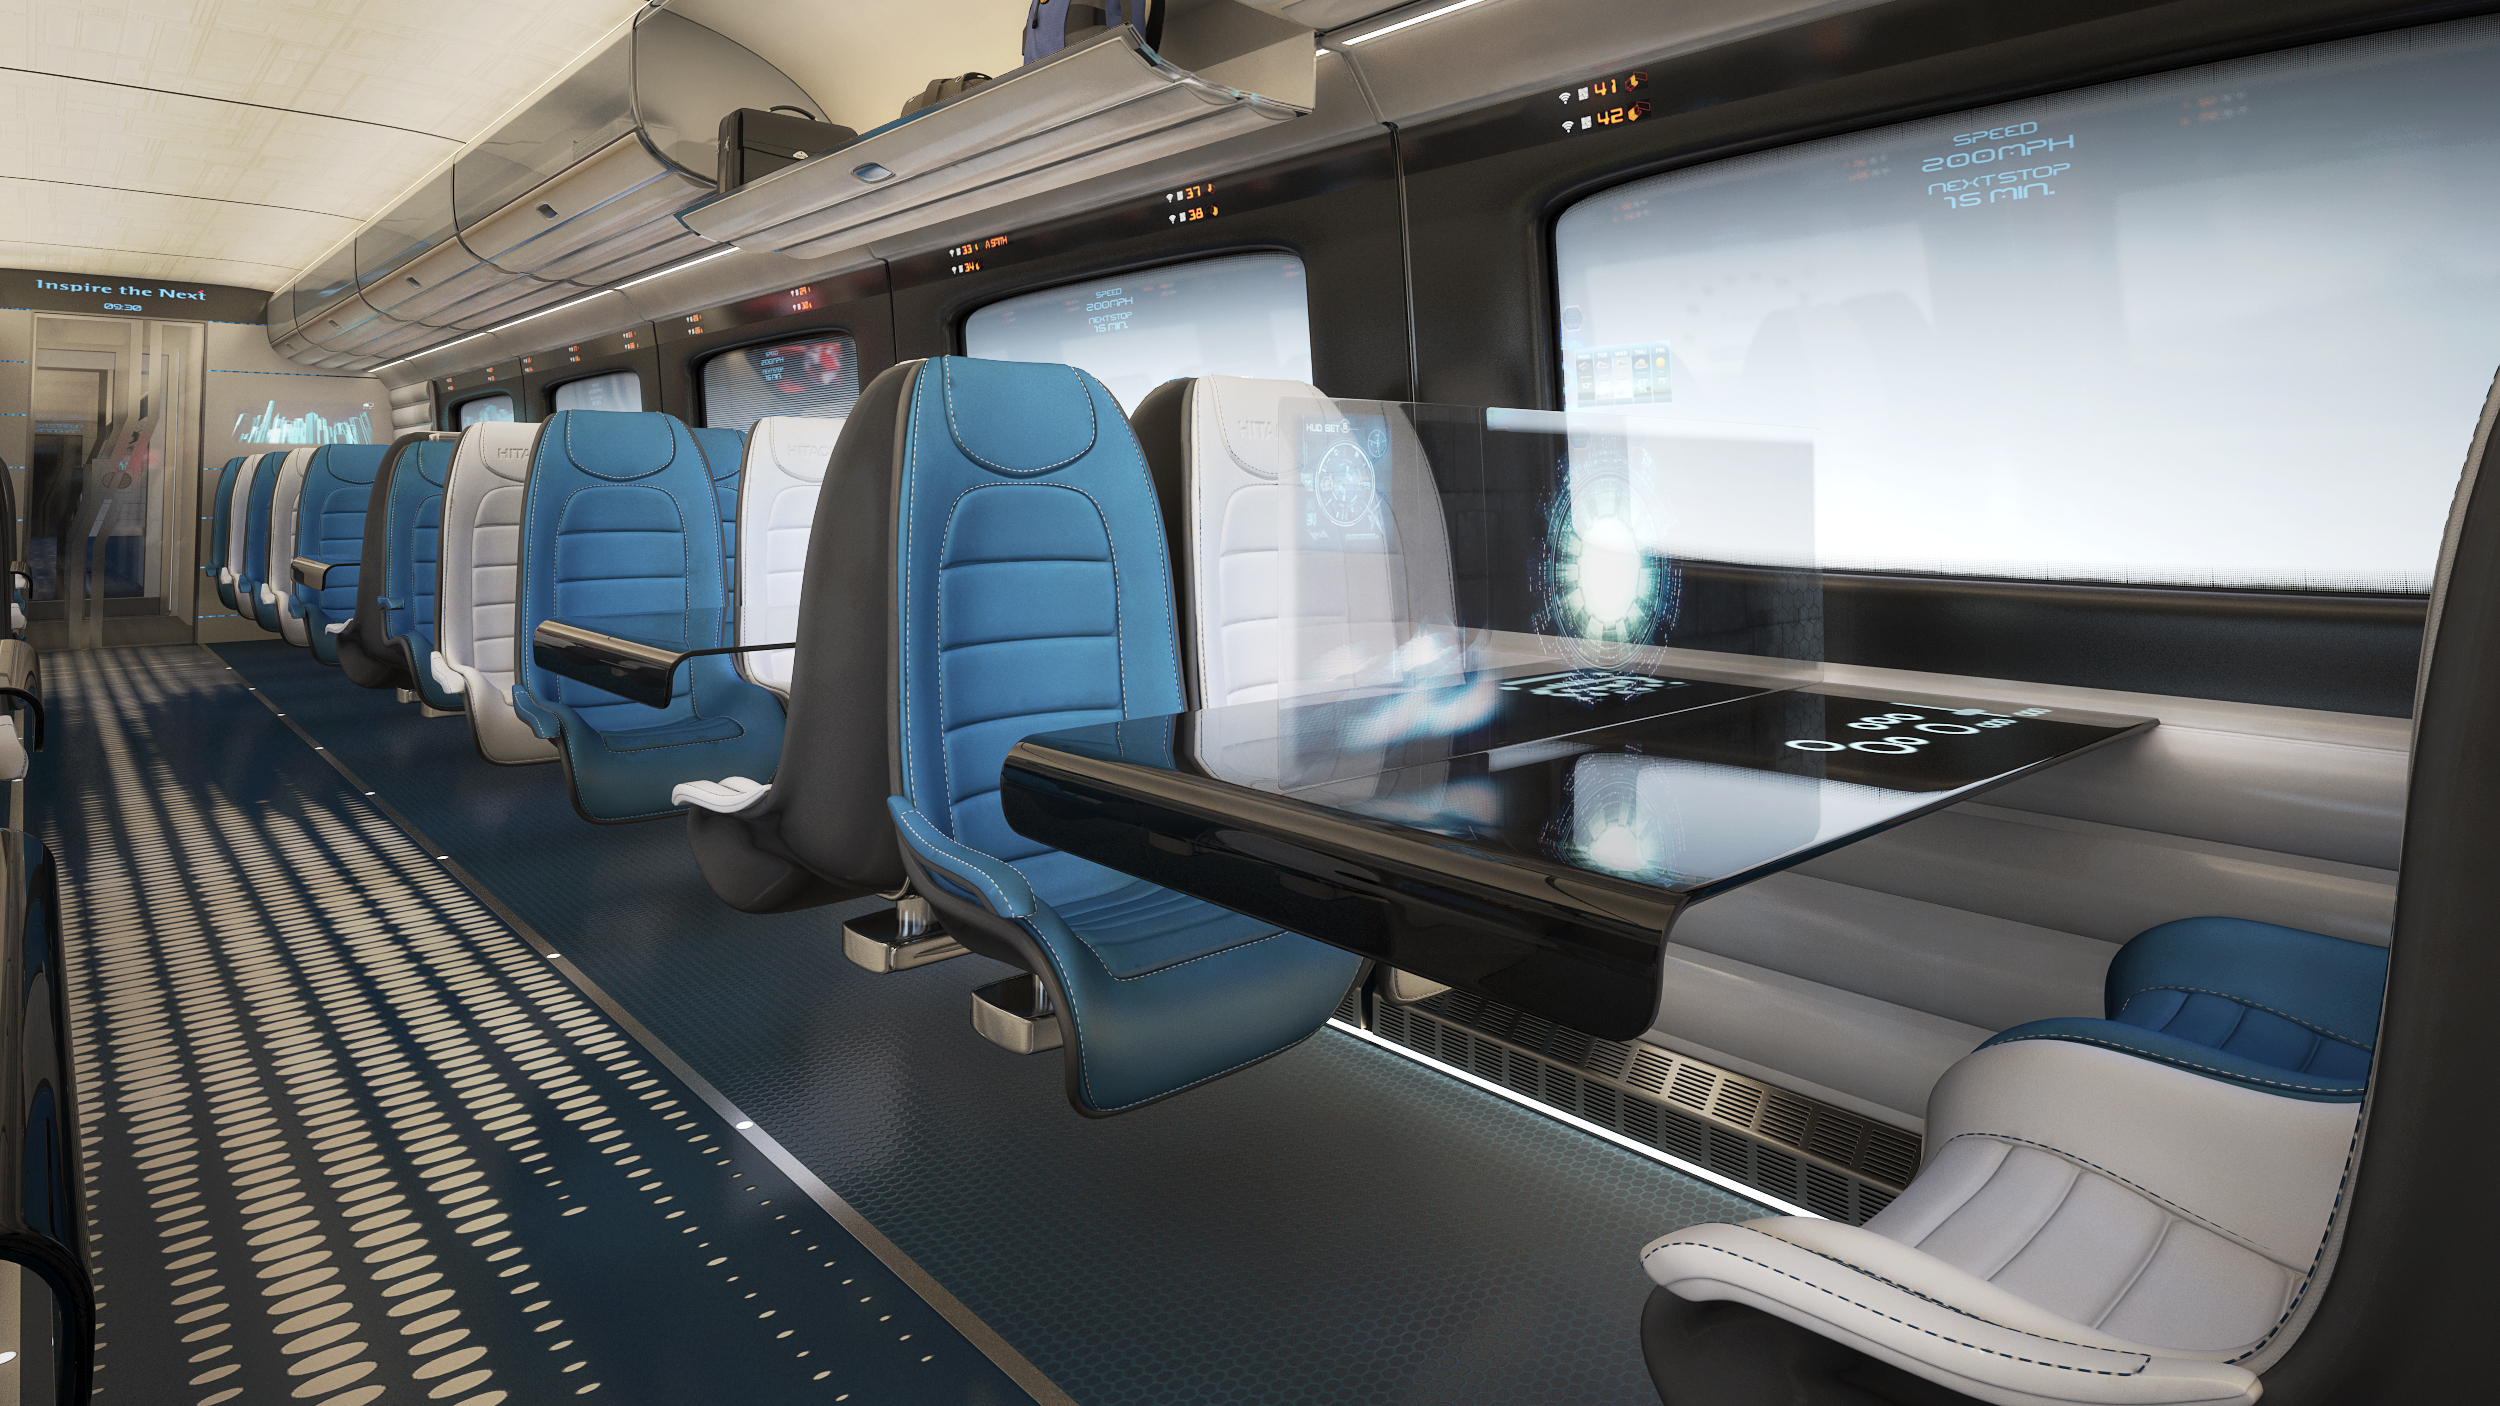 Поезд 800 км в час. С951 Train Interior. 3d Interior Train Concept. Hitachi Rail Italy. Bullet Train Interior.